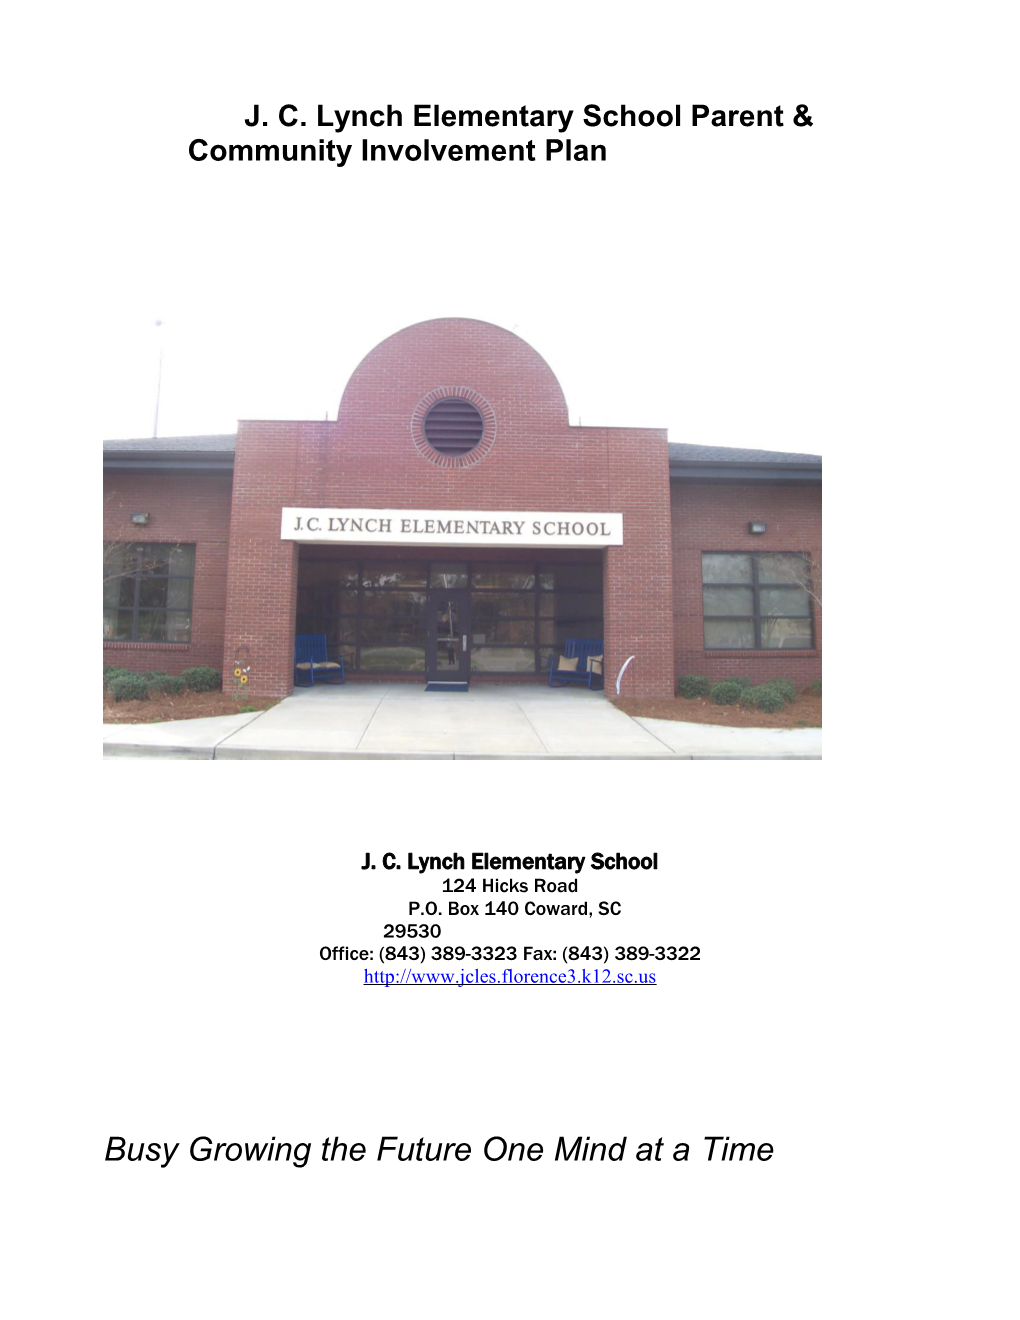 J. C. Lynch Elementary School Parent & Community Involvementplan